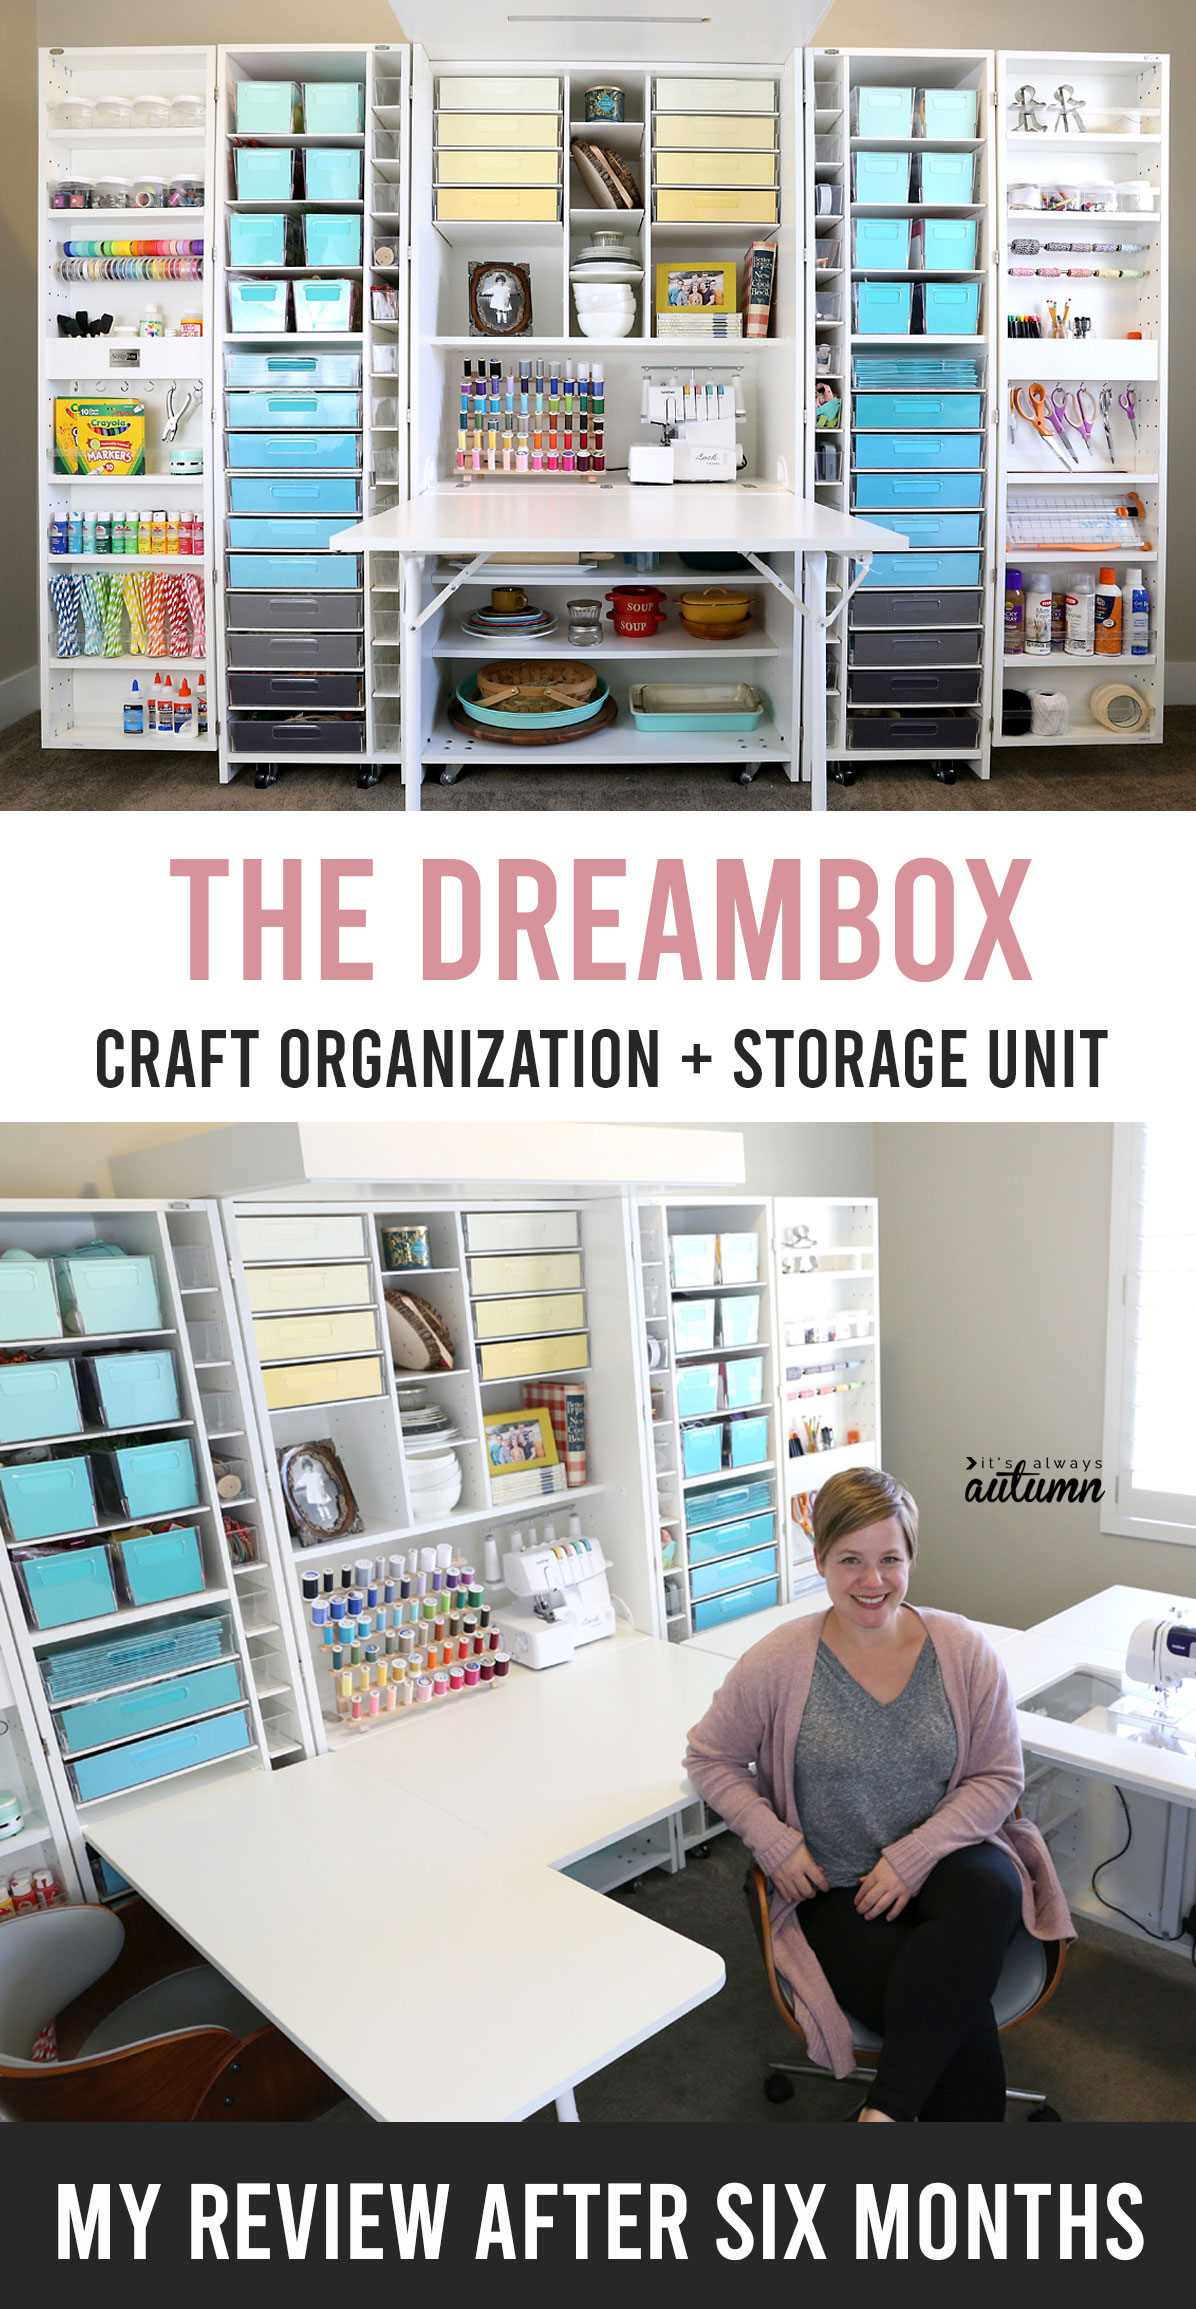 The DreamBox craft organization and storage unit